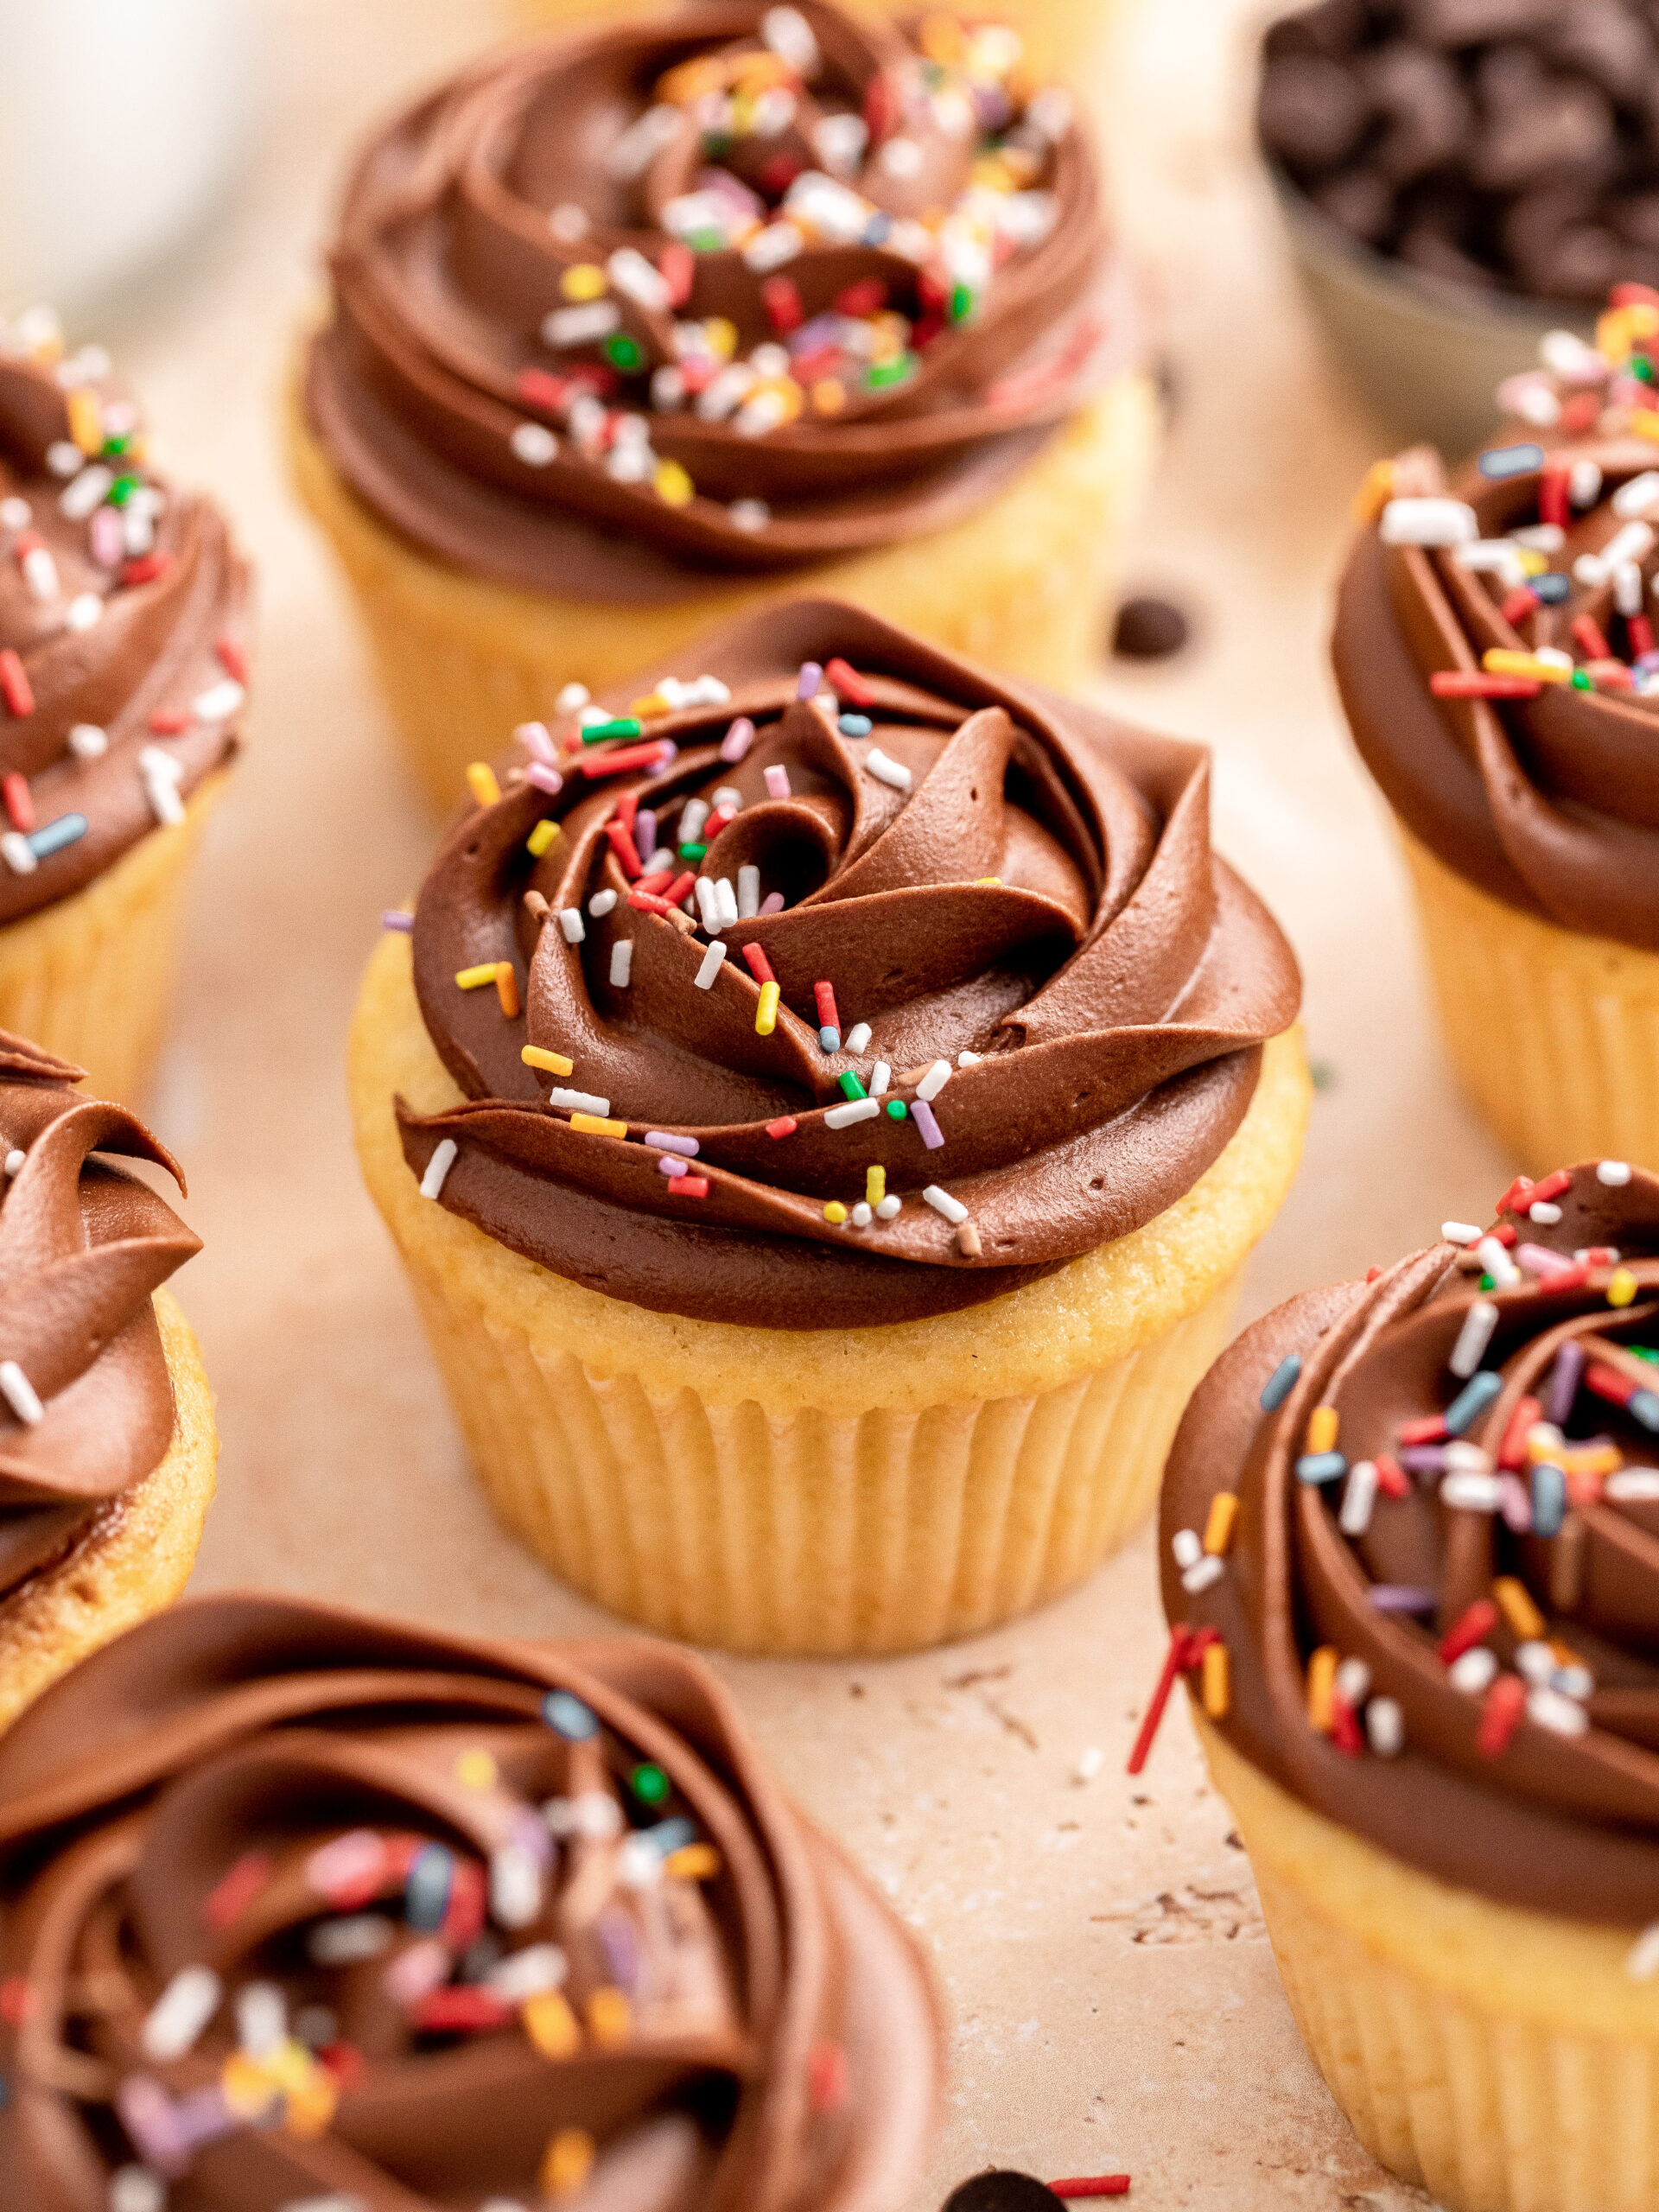 [Image: Chocolate-and-Vanilla-Cupcakes-11-scaled.jpg]